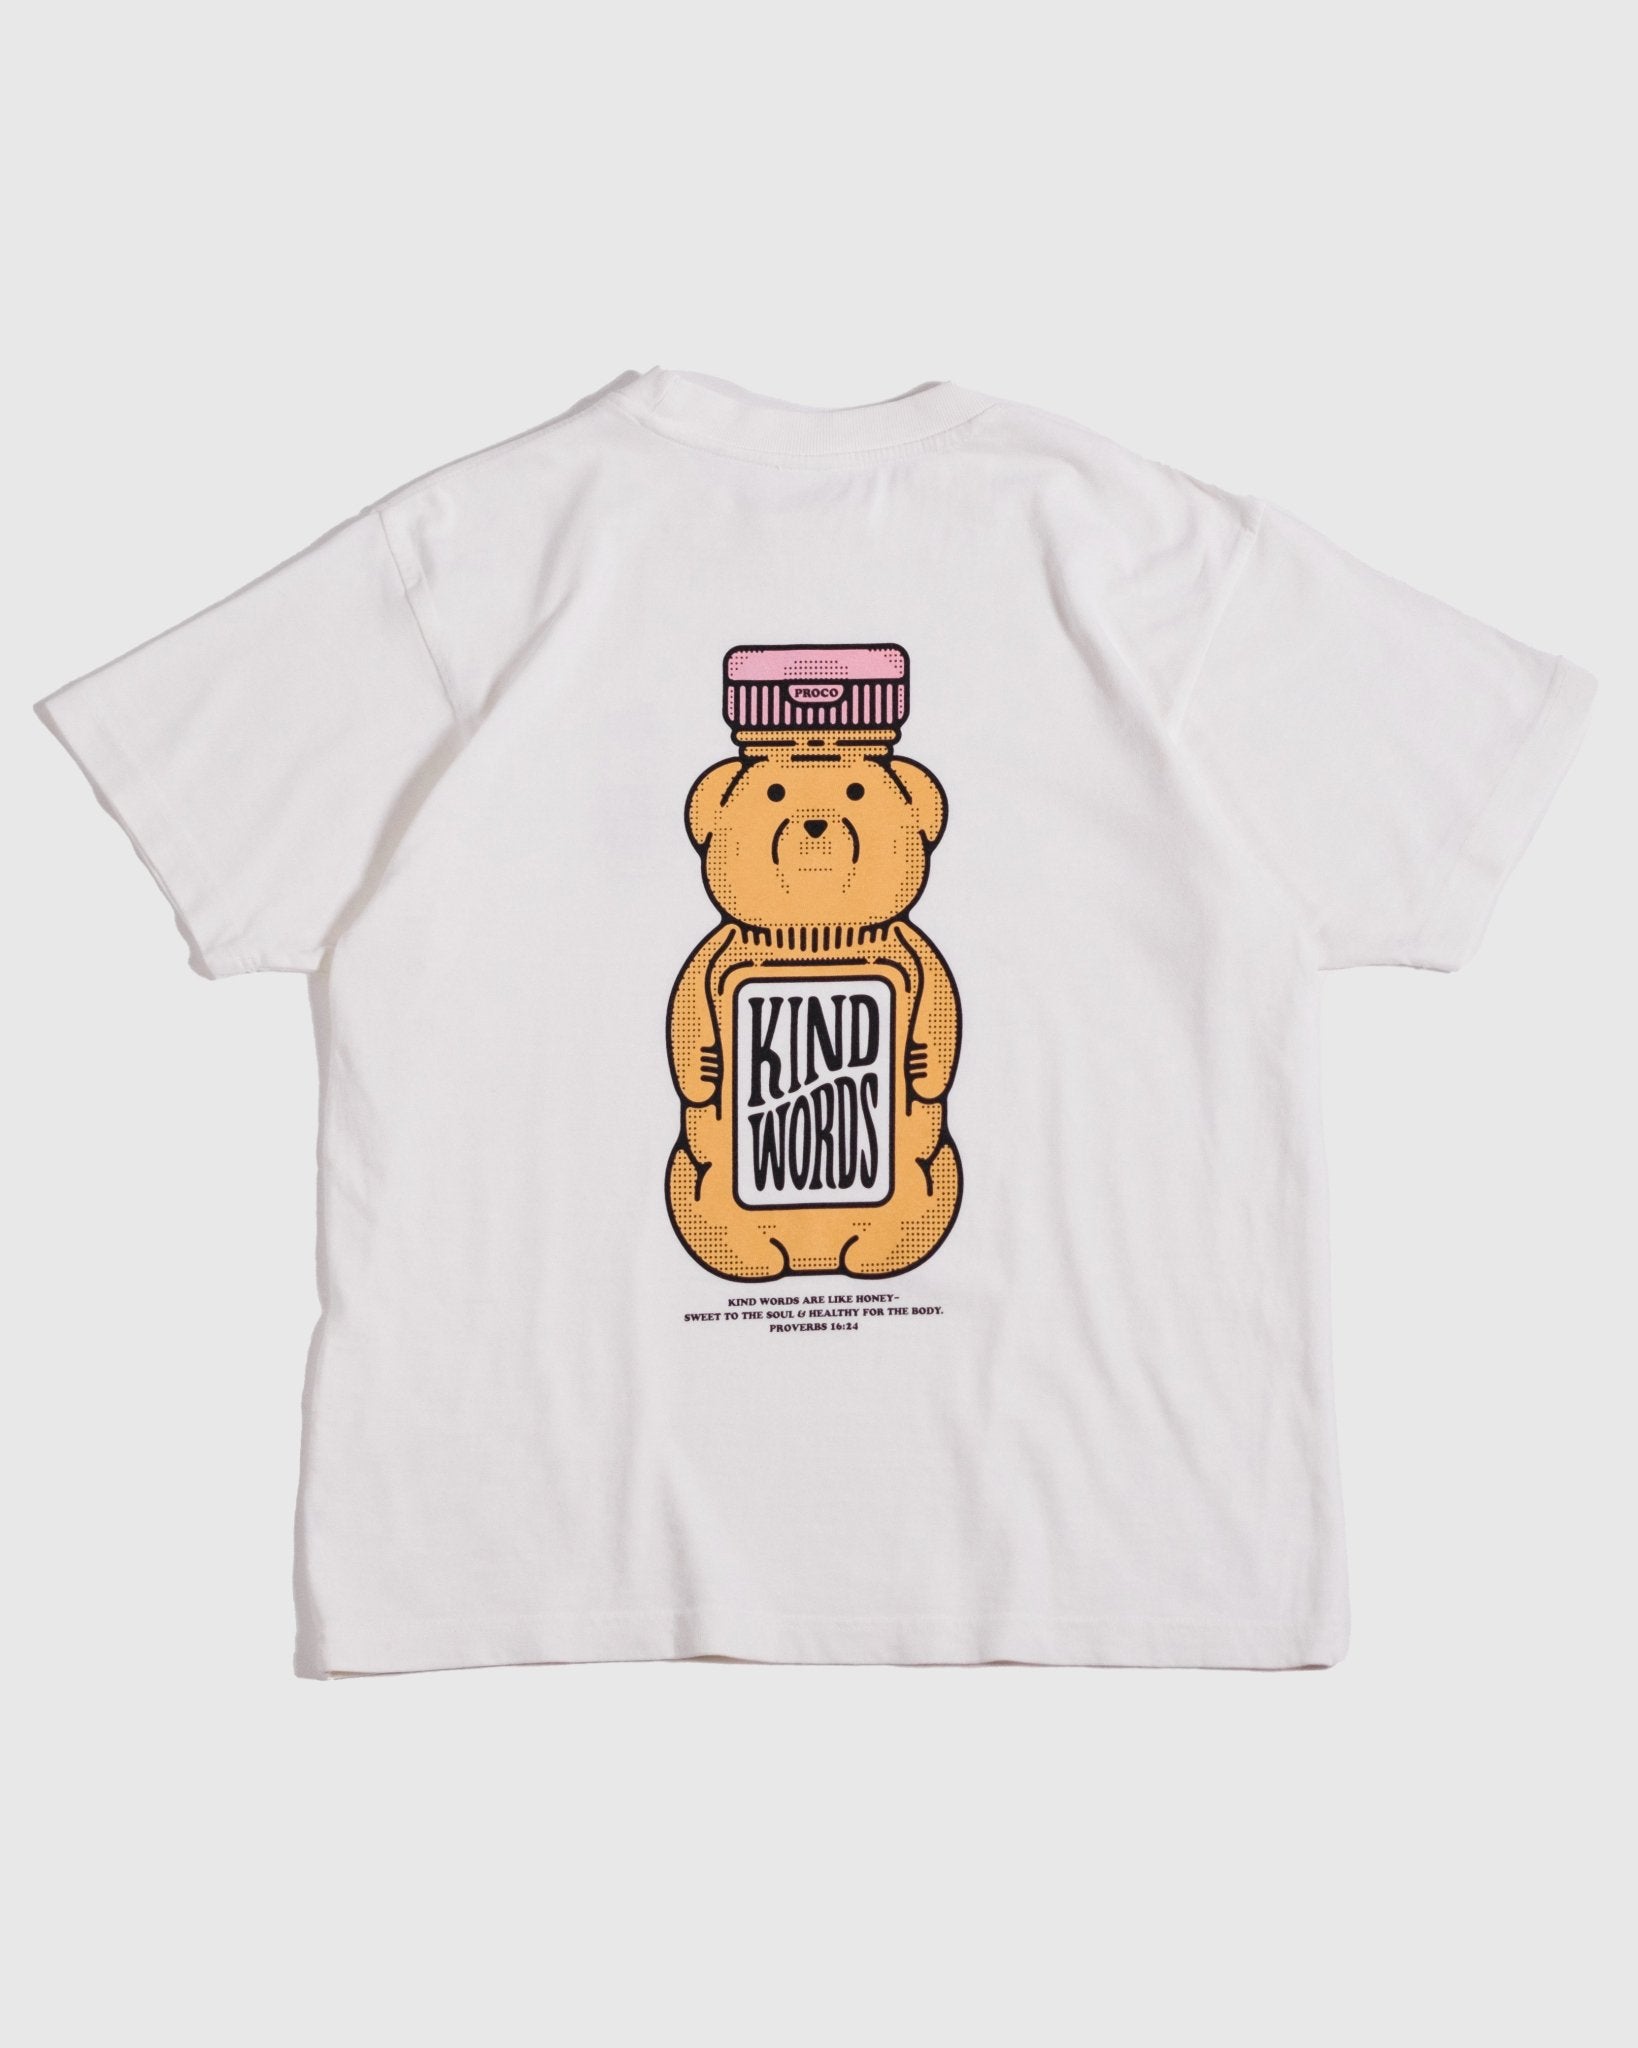 "Kind Words - Honey Bear" White Heavyweight Tee - Proclamation Coalition